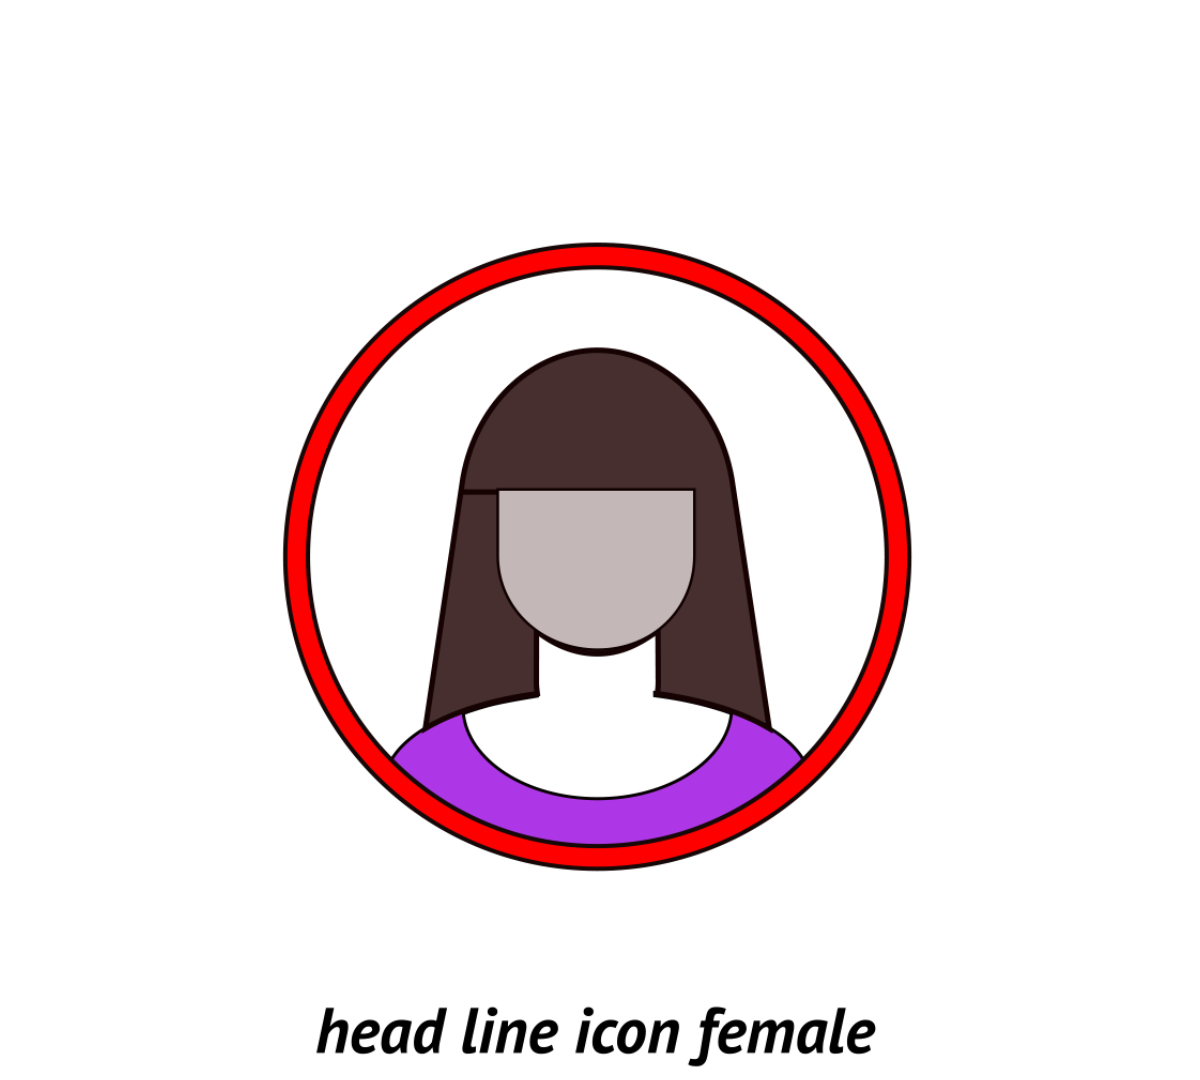 Female head in a circle icon